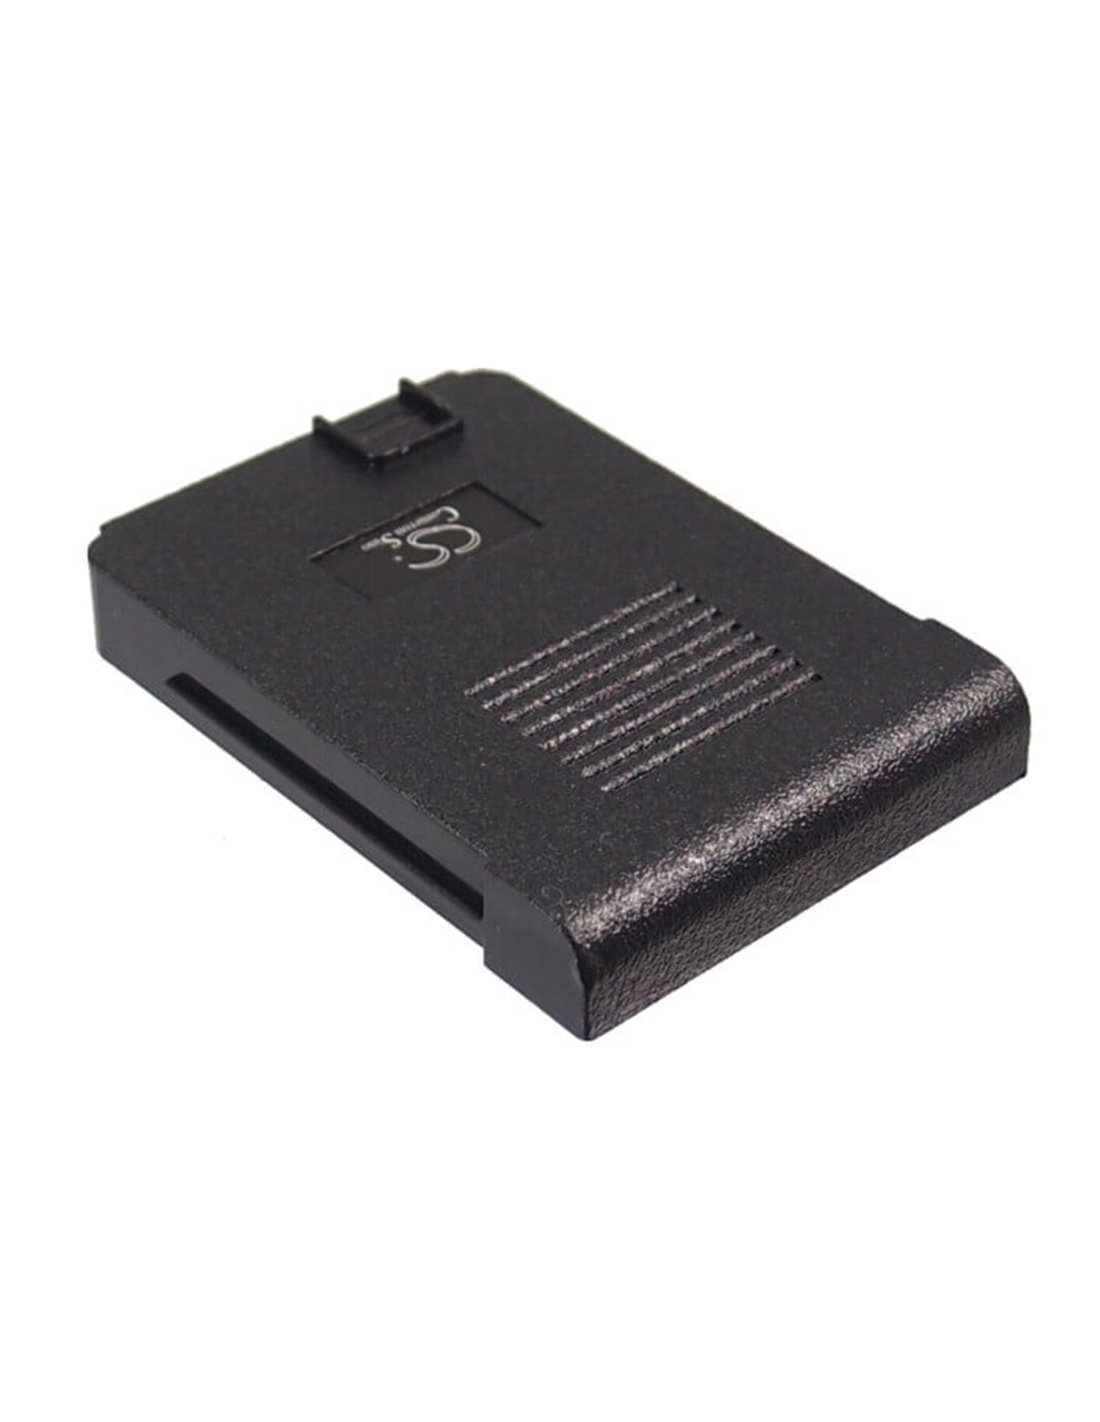 Motorola NEW OEM Minitor V Pager Battery RLN5707A RLN5707 